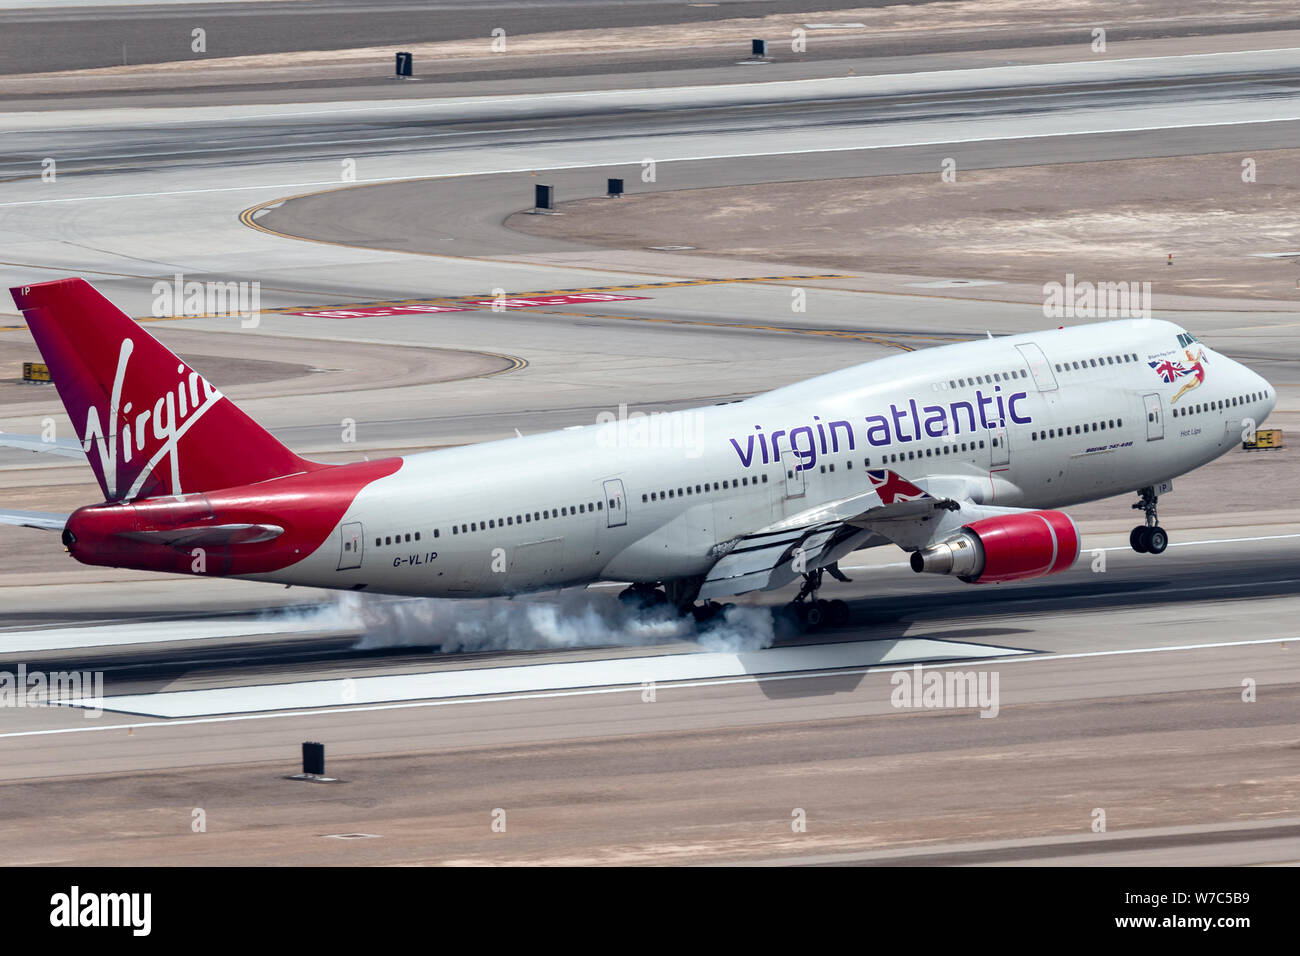 Virgin Atlantic Airways Boeing 747-400 jumbo jet touching down on the runway at McCarran International Airport in Las Vegas. Stock Photo